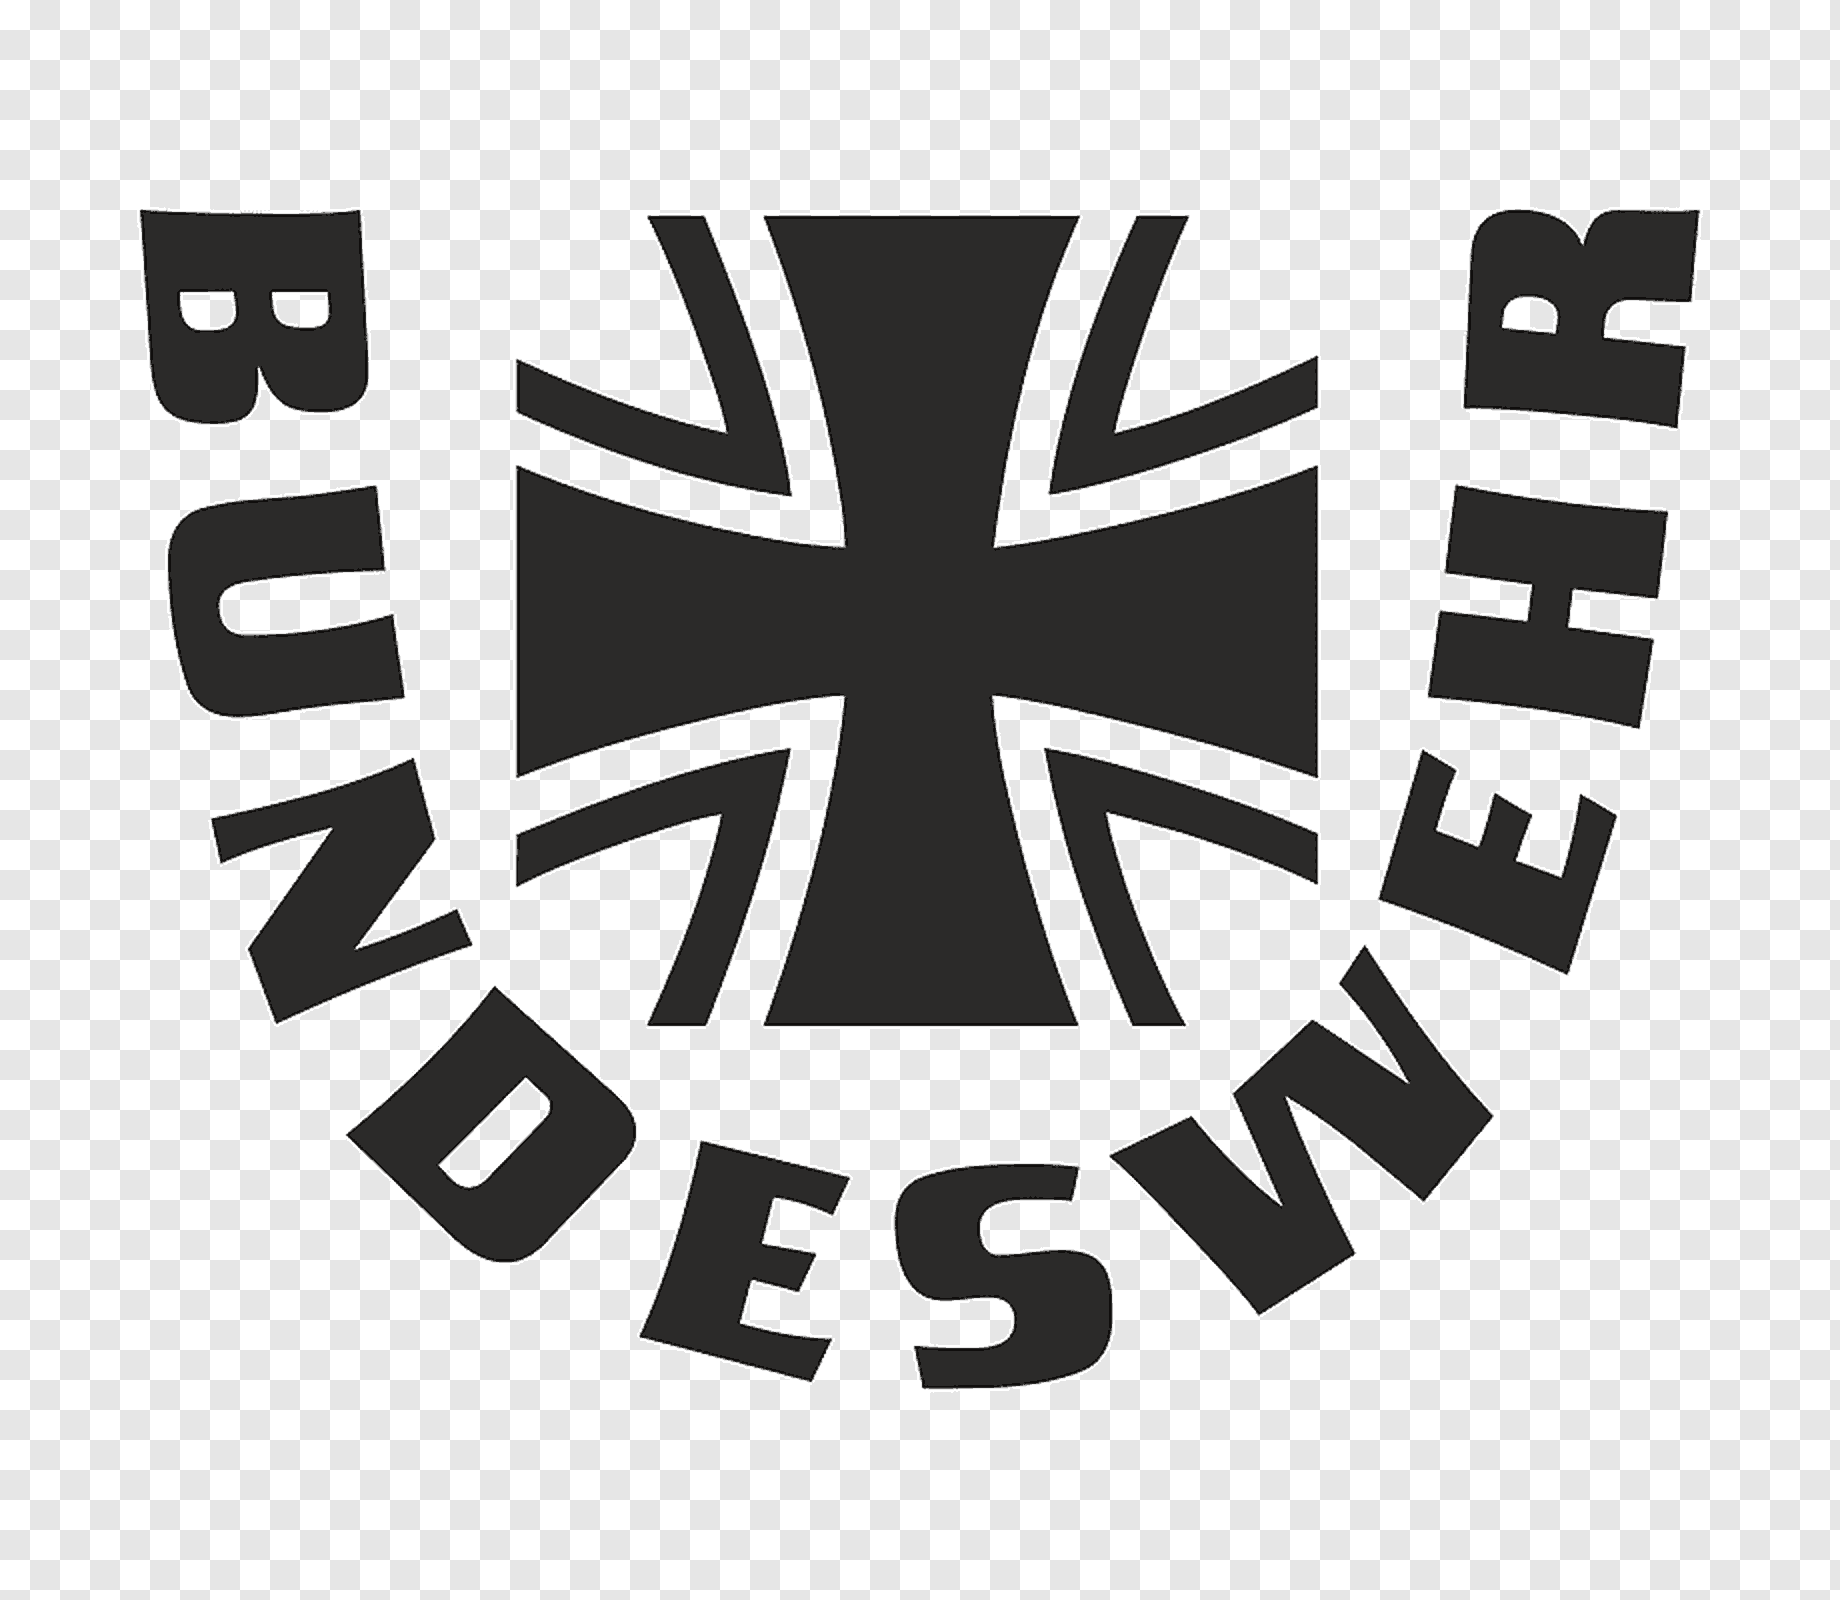 Bundeswehr logo